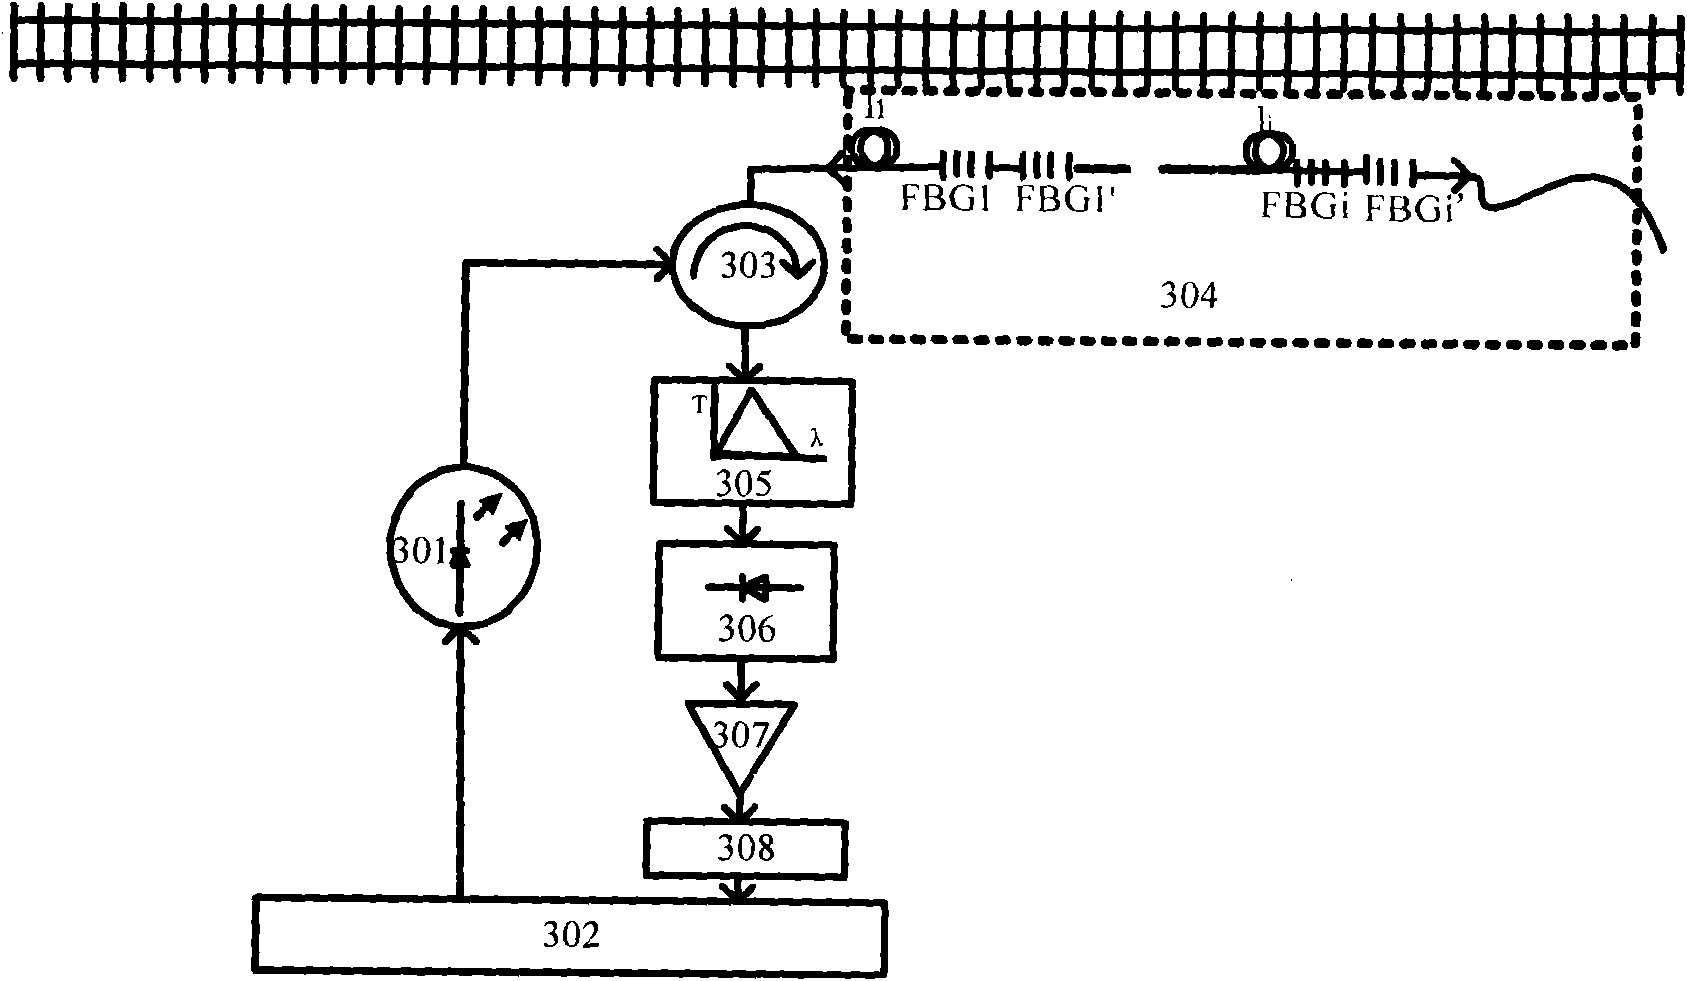 Fiber bragg grating track sensing system based on optical code division multiple access technique